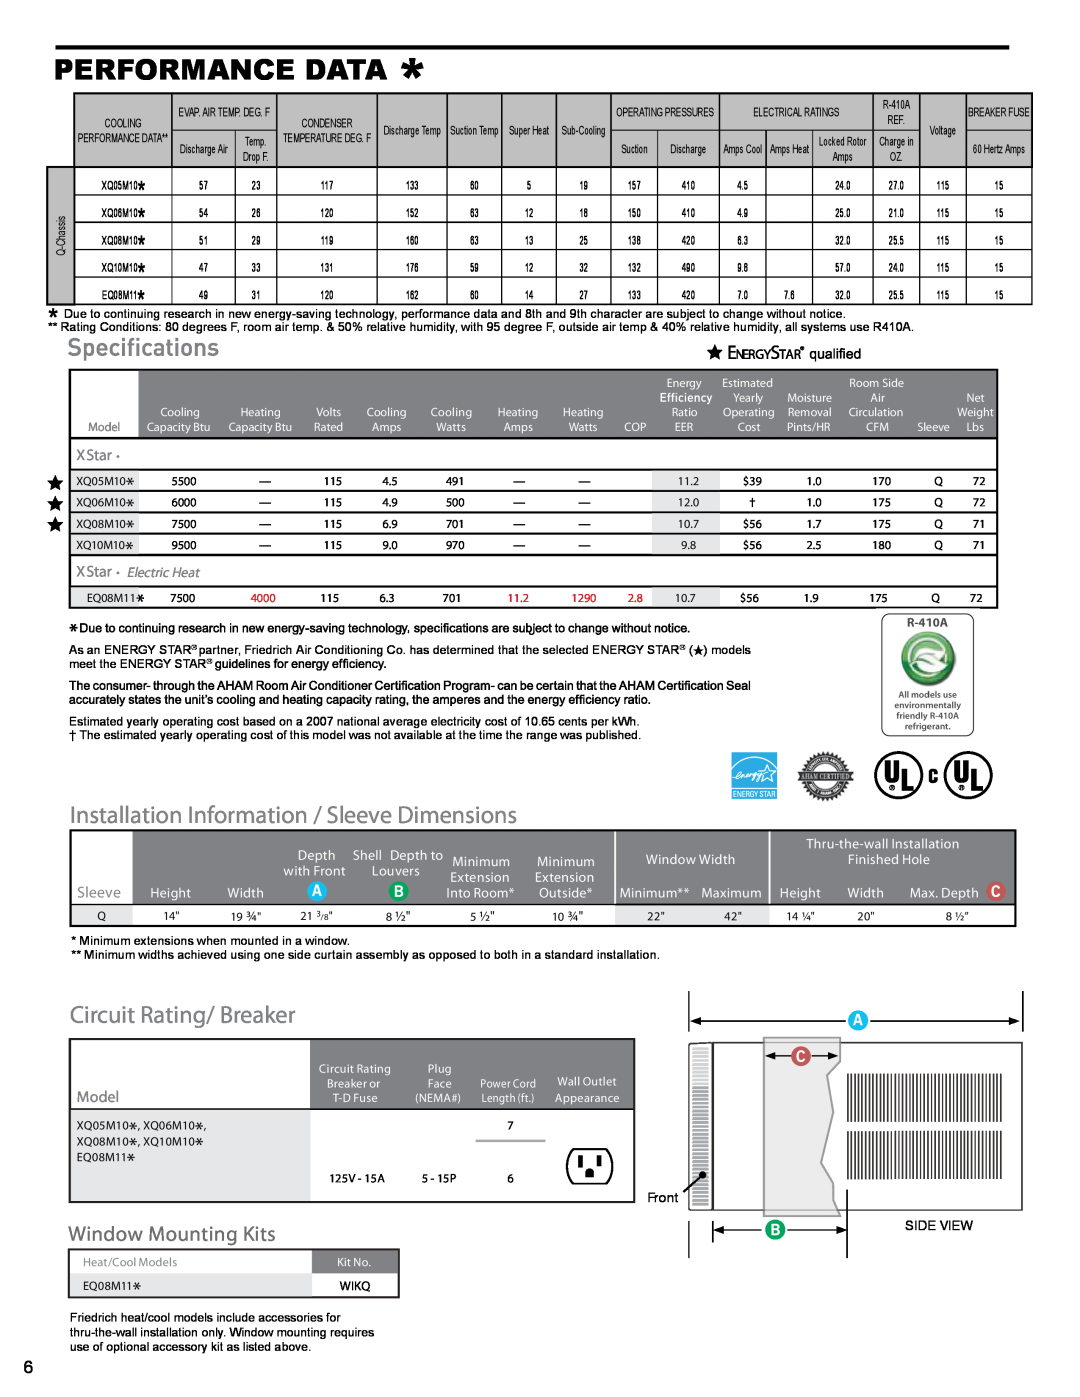 Friedrich XQ05M10 Performance Data, Installation Information / Sleeve Dimensions, Circuit Rating/ Breaker, XStar, Model 